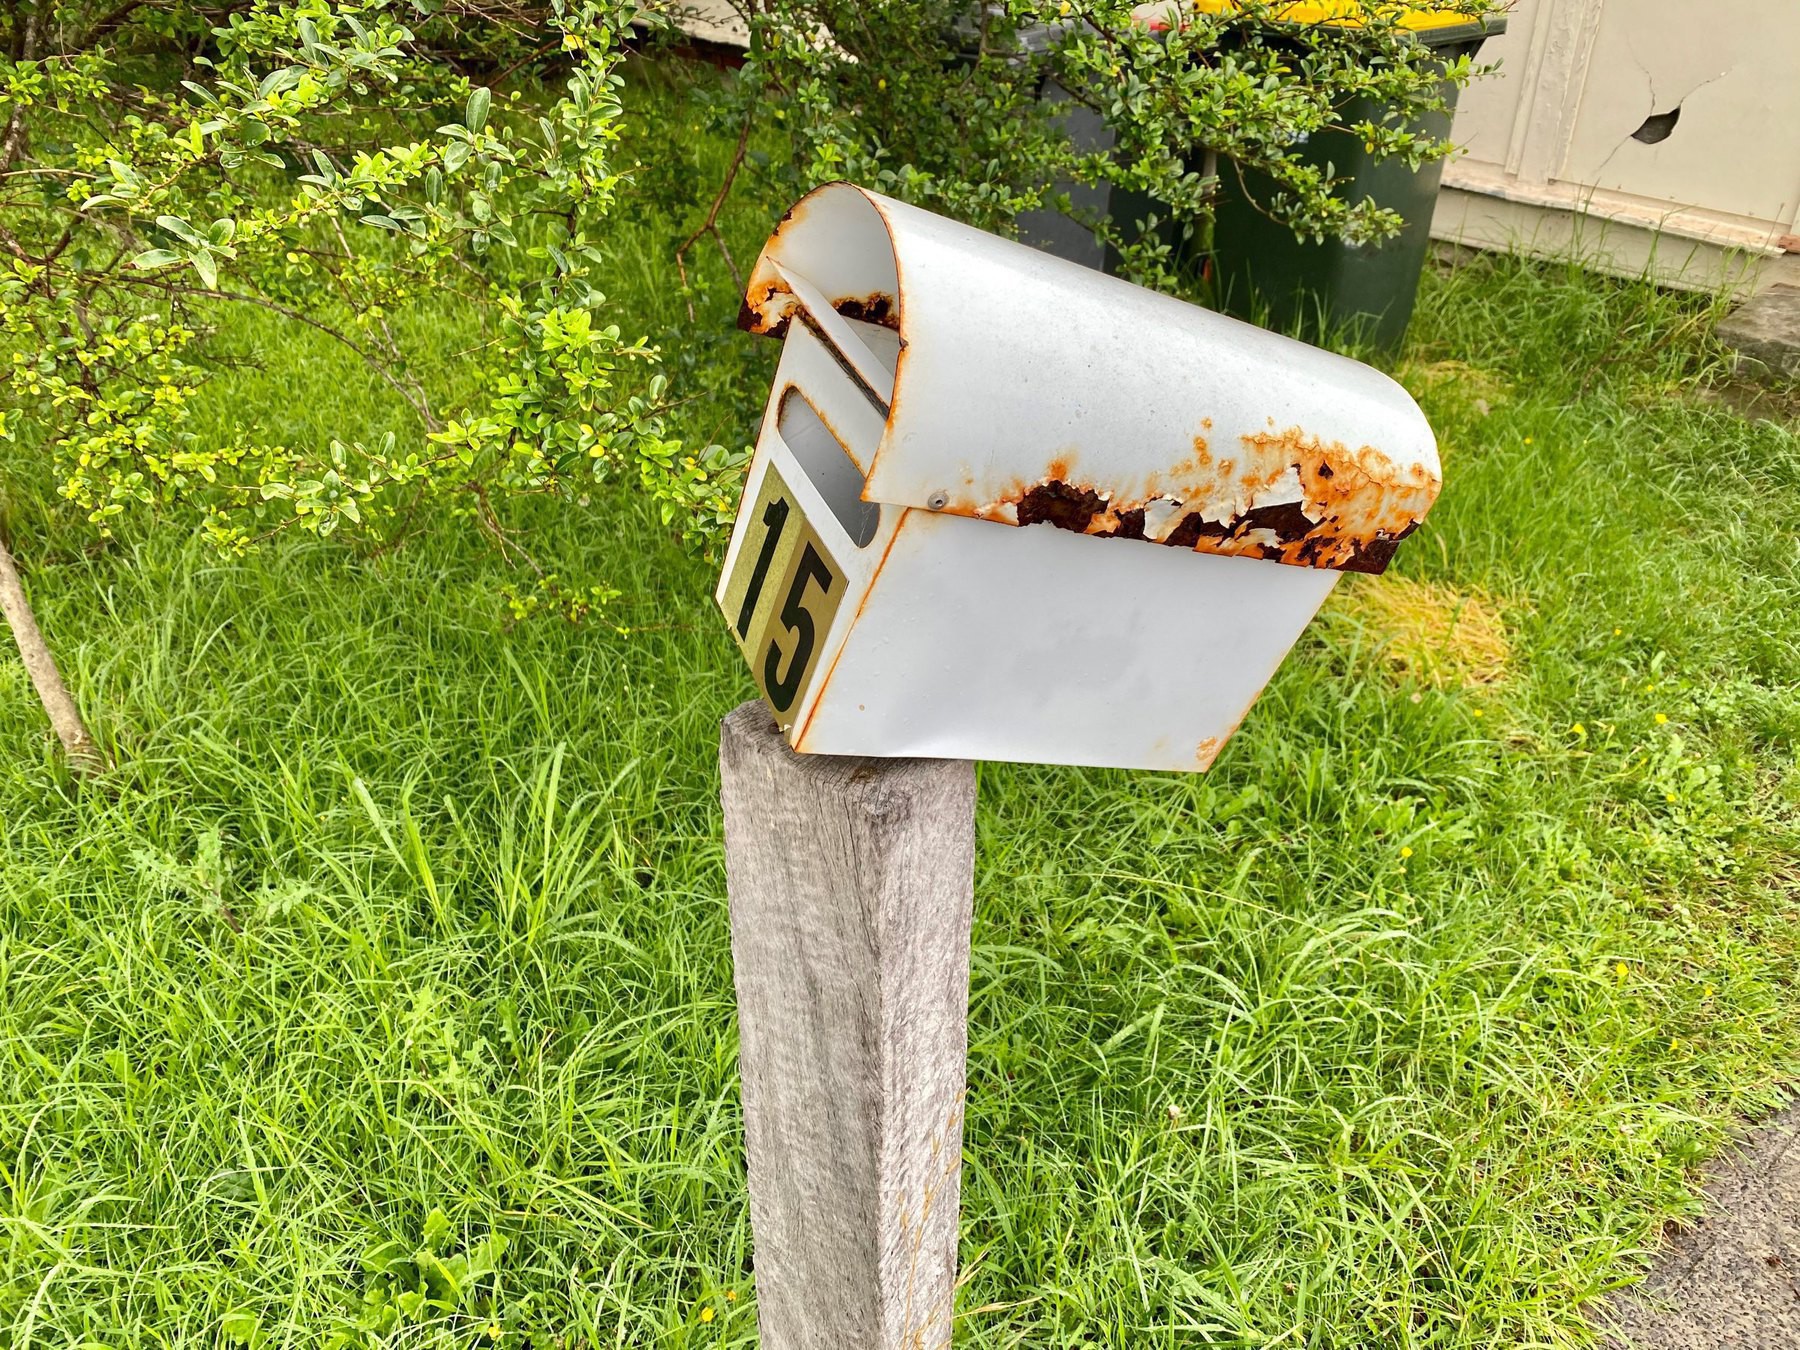 A teetering mailbox